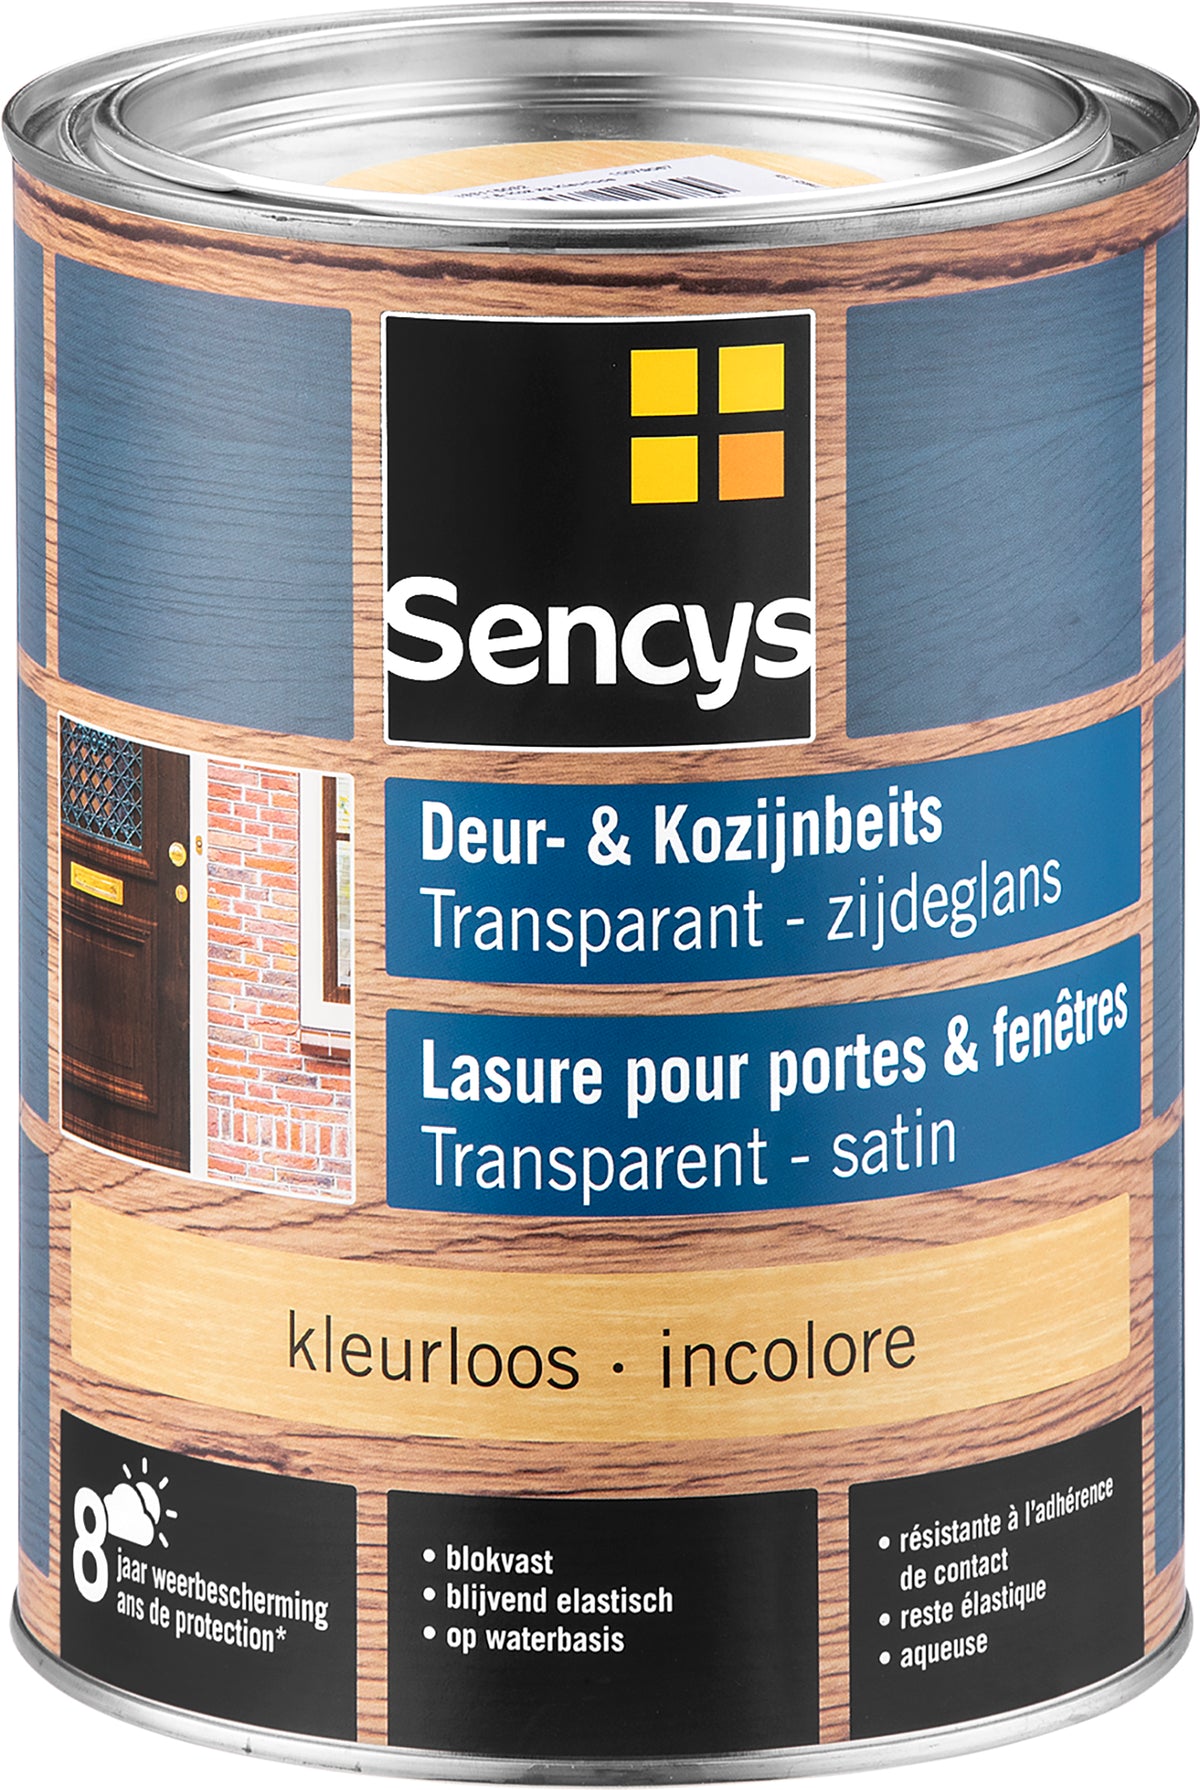 Sencys beits ramen en deuren semi-transparant zijdeglans kleurloos 2,5L